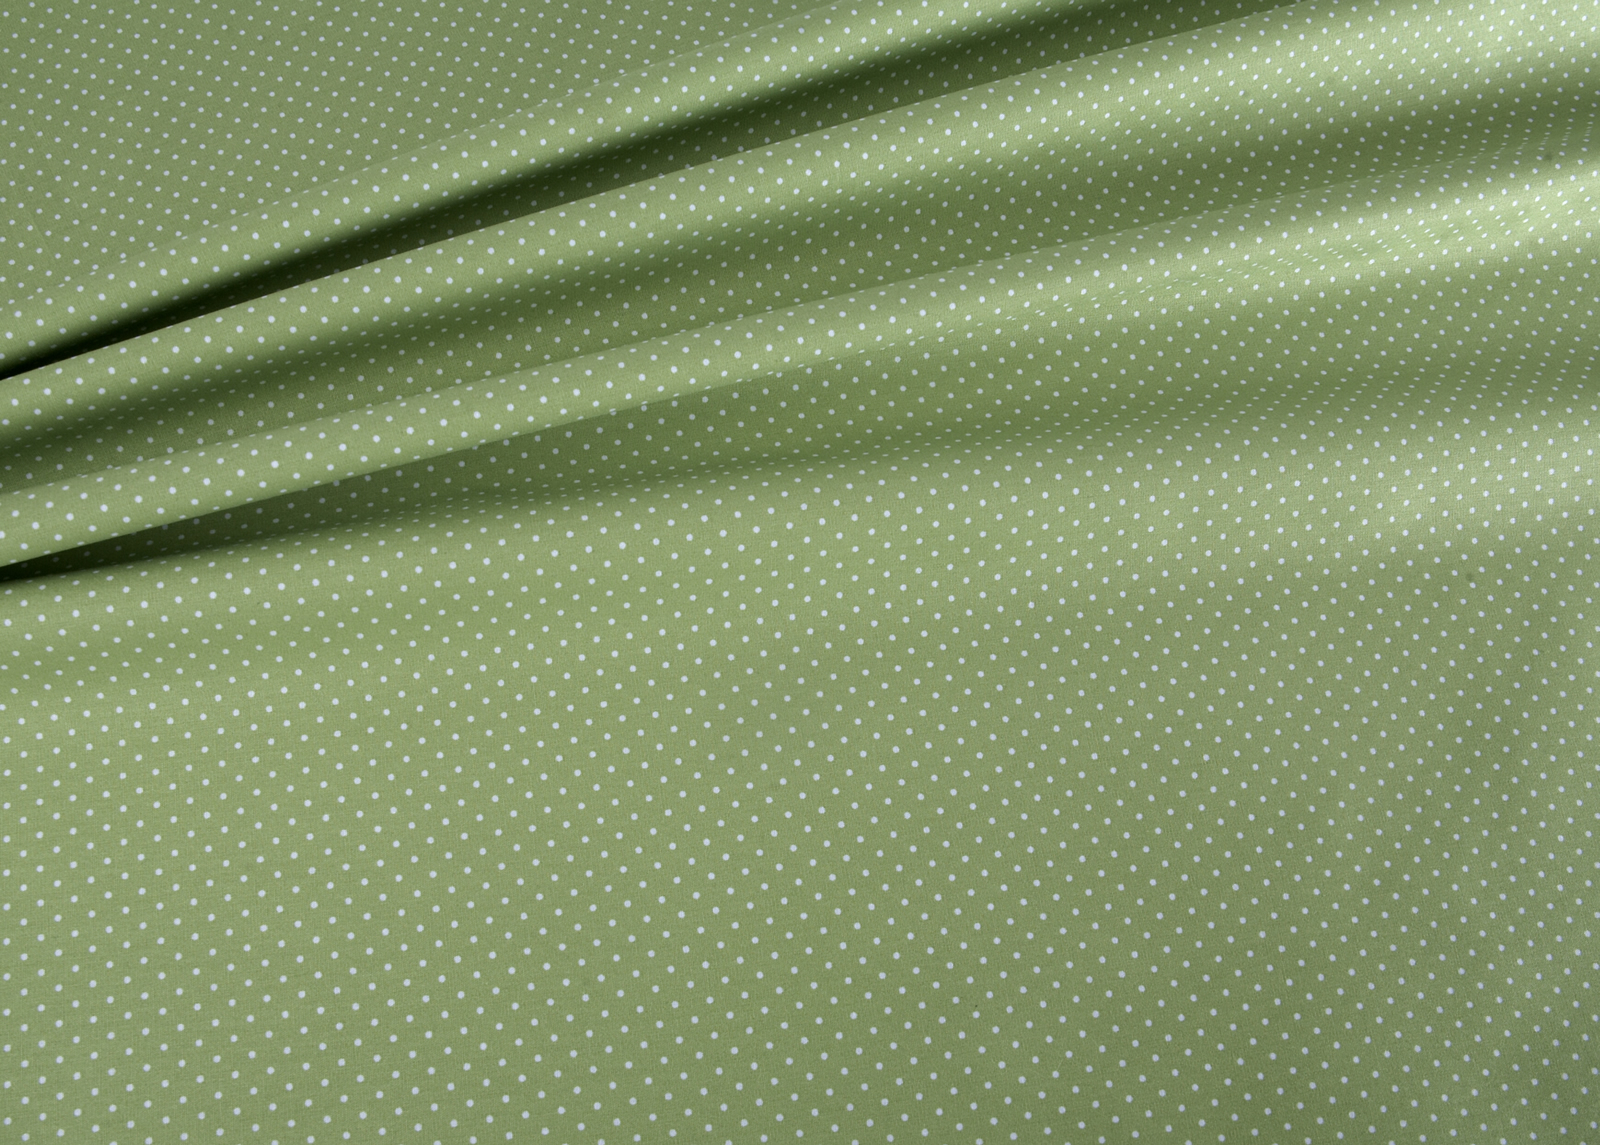 Green Pin Spot Cotton